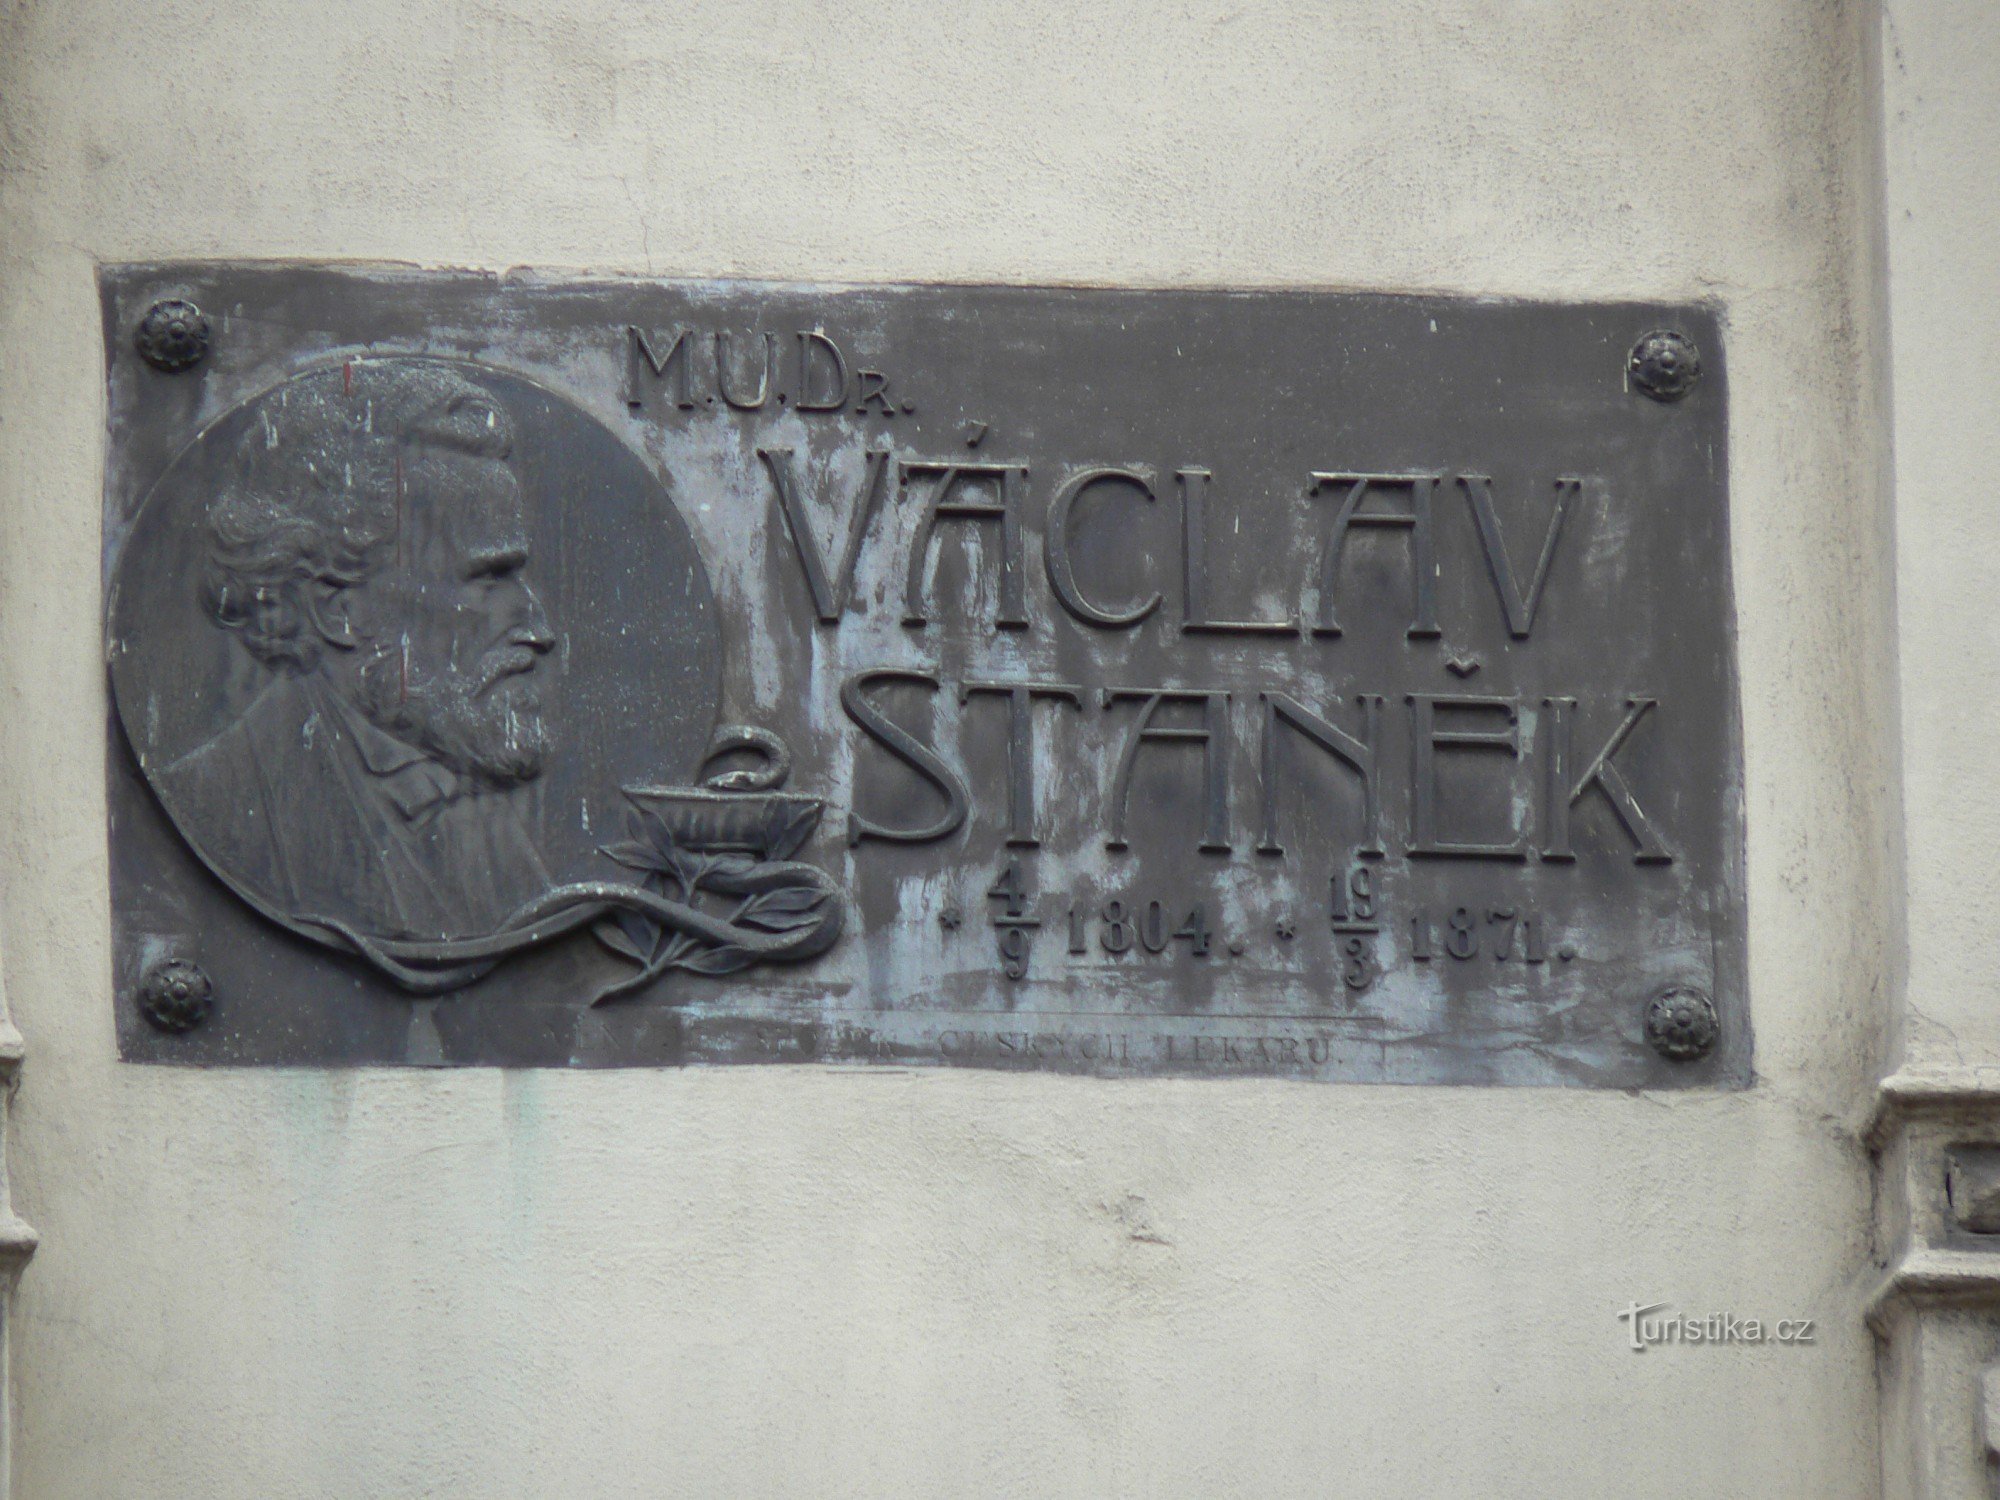 Spomen ploča MUDr. Václav Stanek